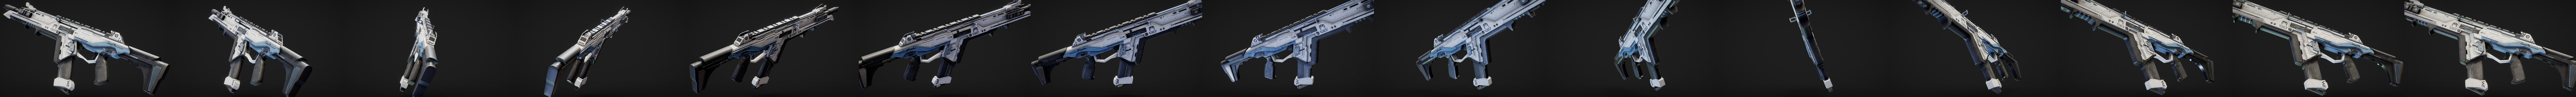 R 301 Carbine Apex Legends 3d Model By Taiga Zoe Taiga Zoe